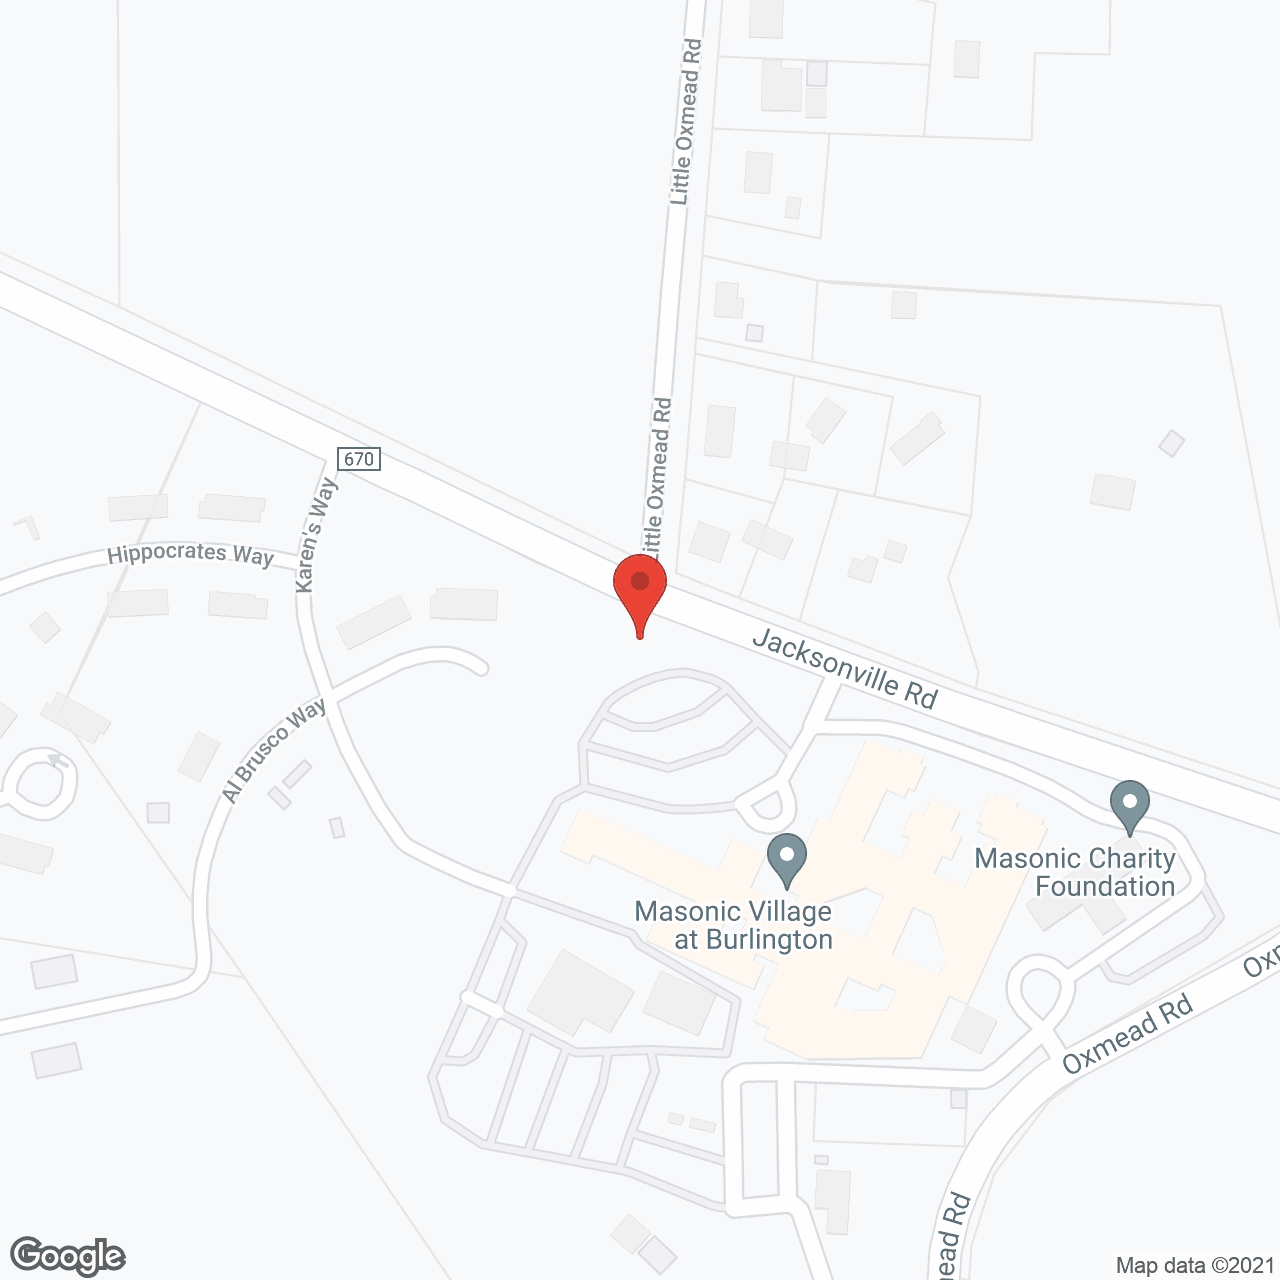 Masonic Village at Burlington in google map